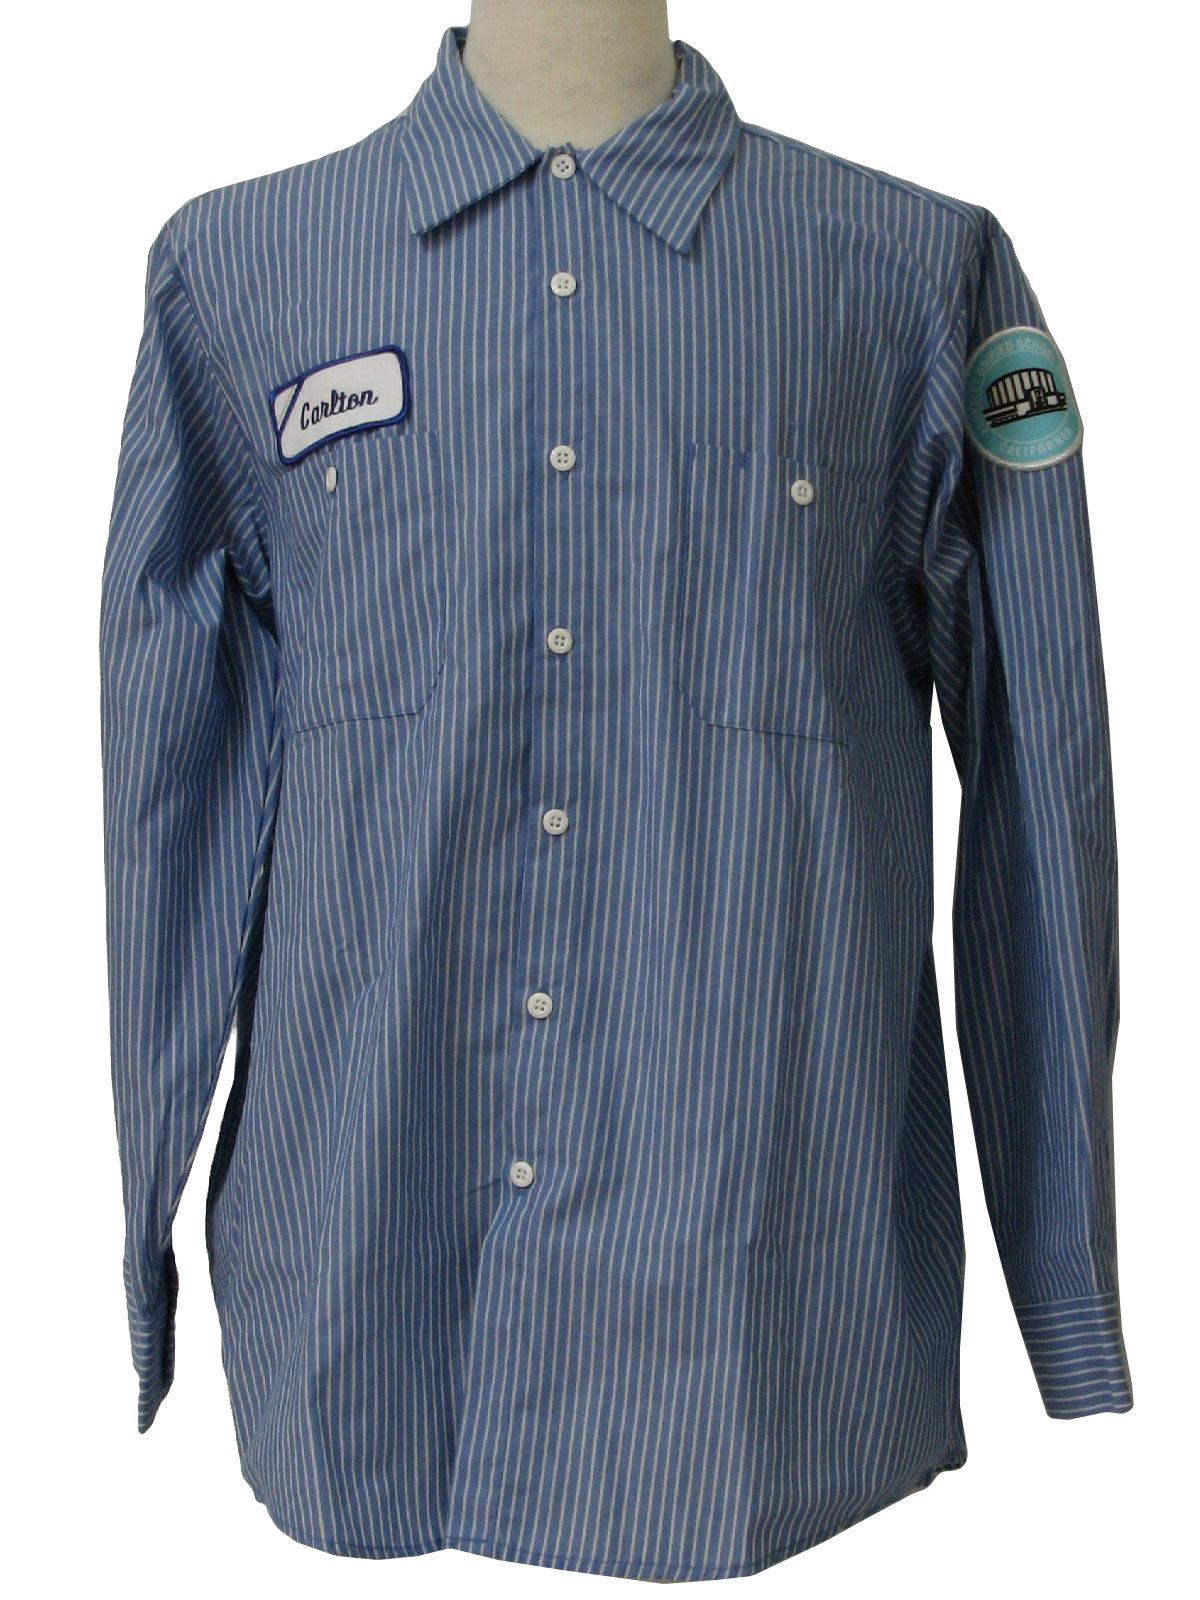 1990s Aramark Shirt: 90s -Aramark- Mens blue and white striped cotton ...